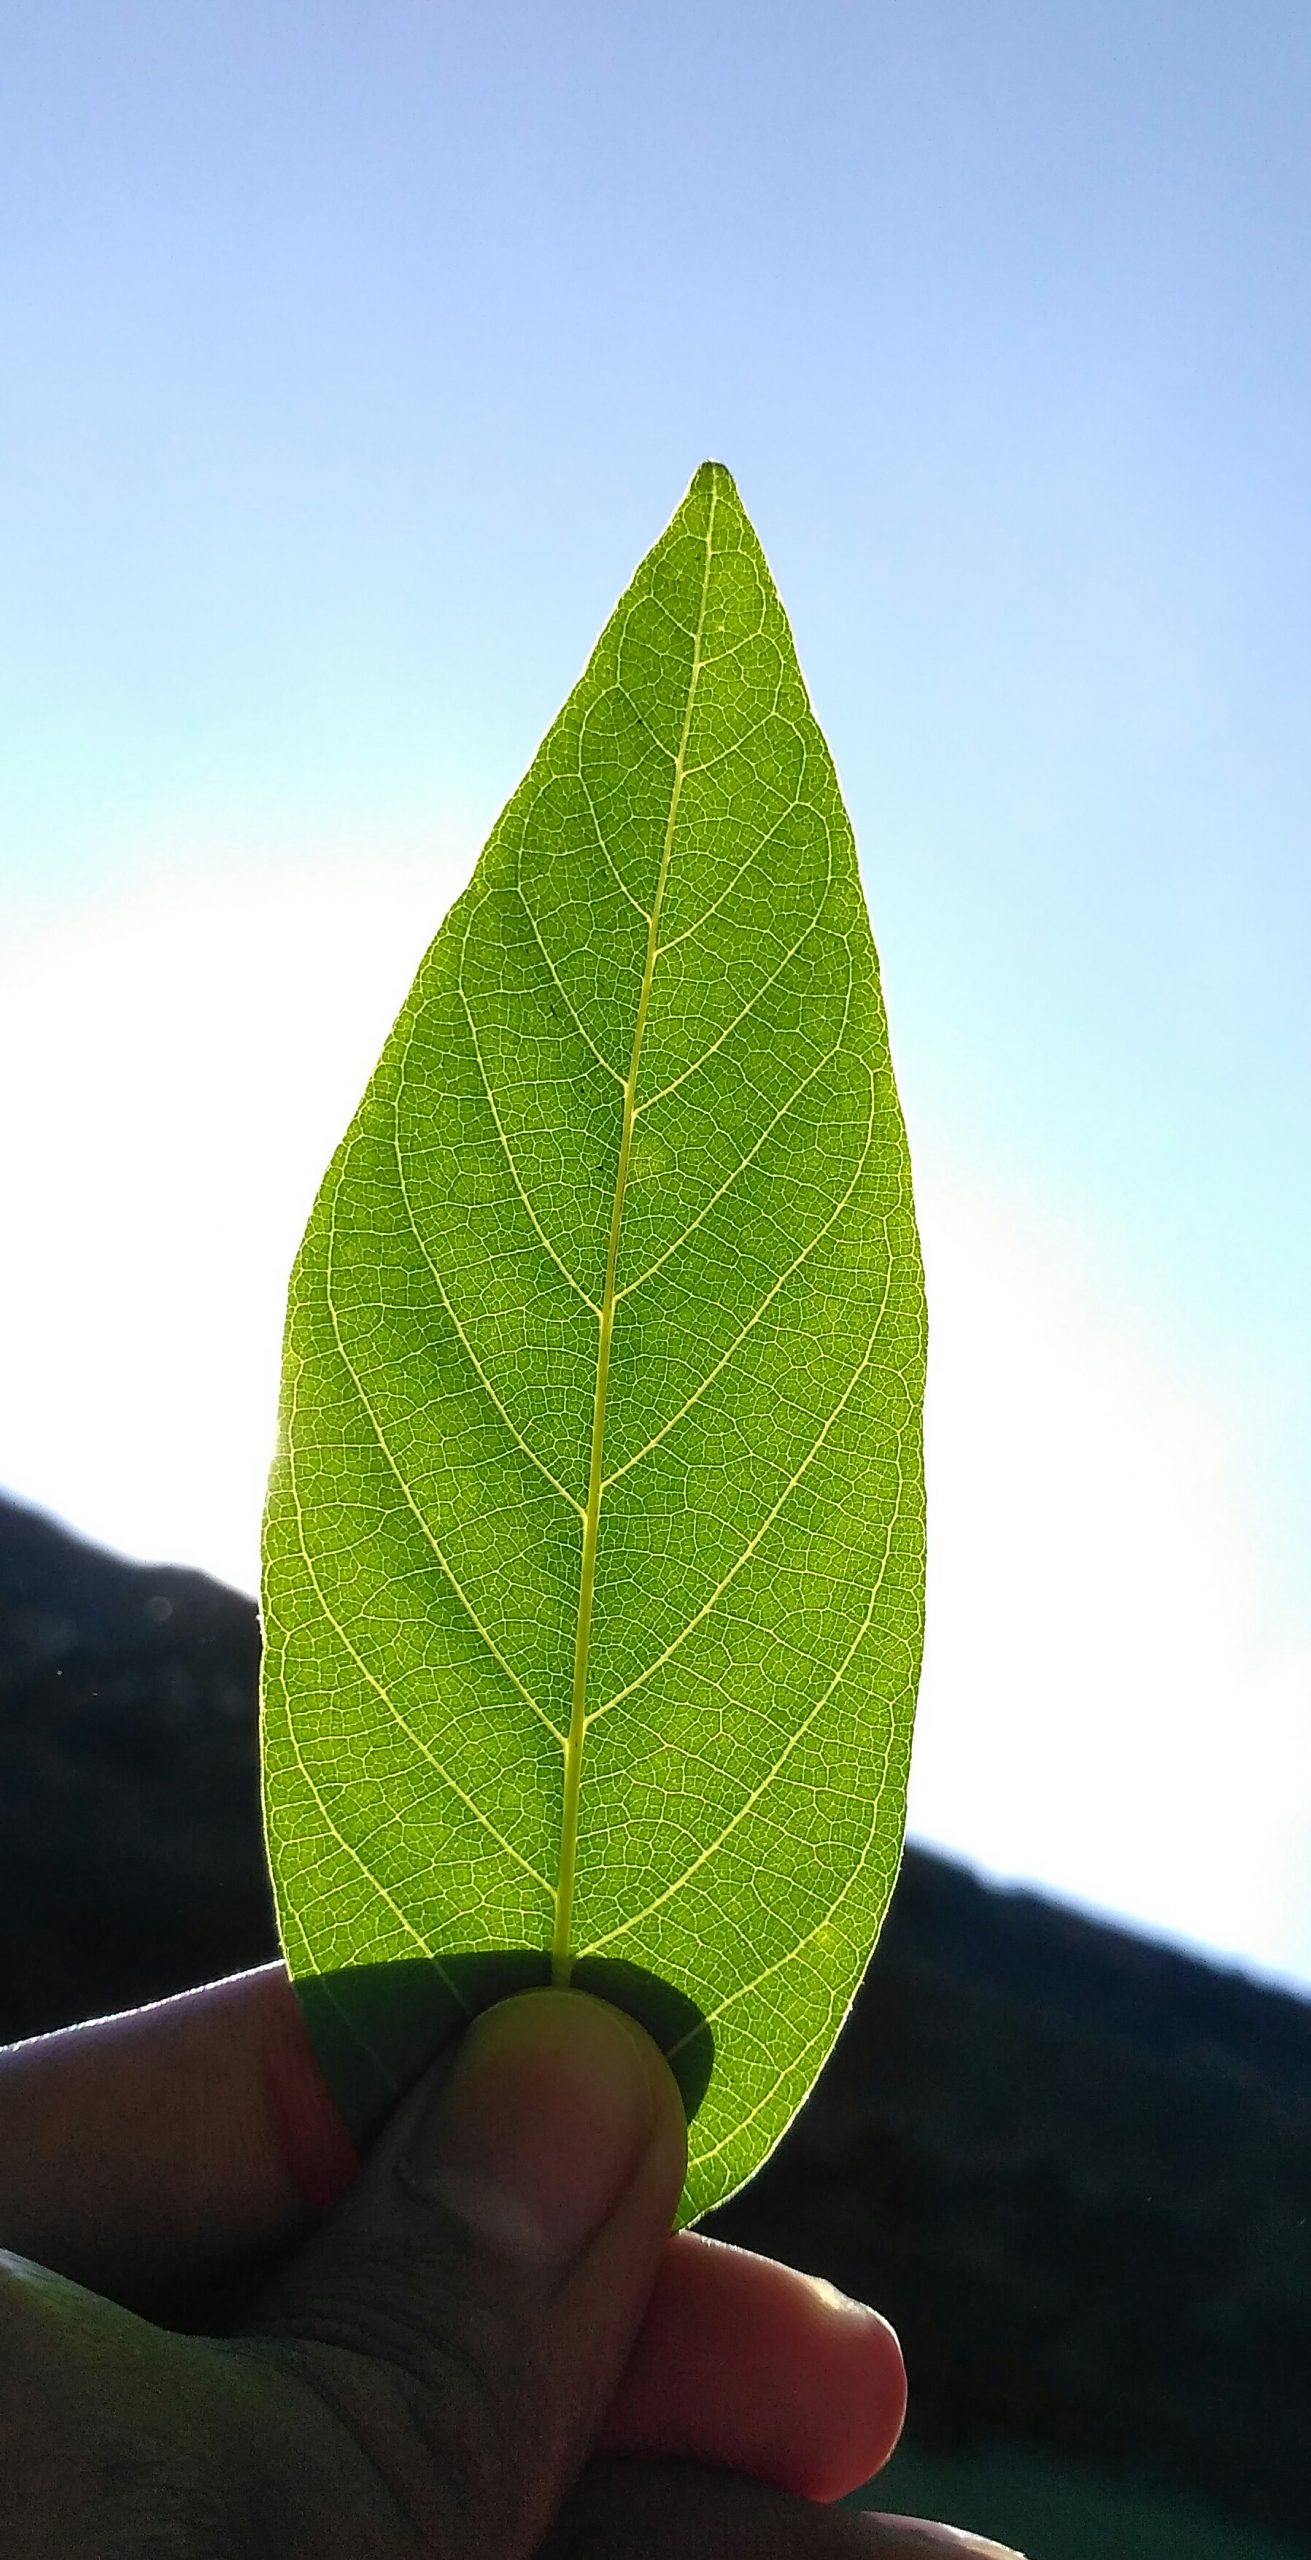 A green leaf in hand